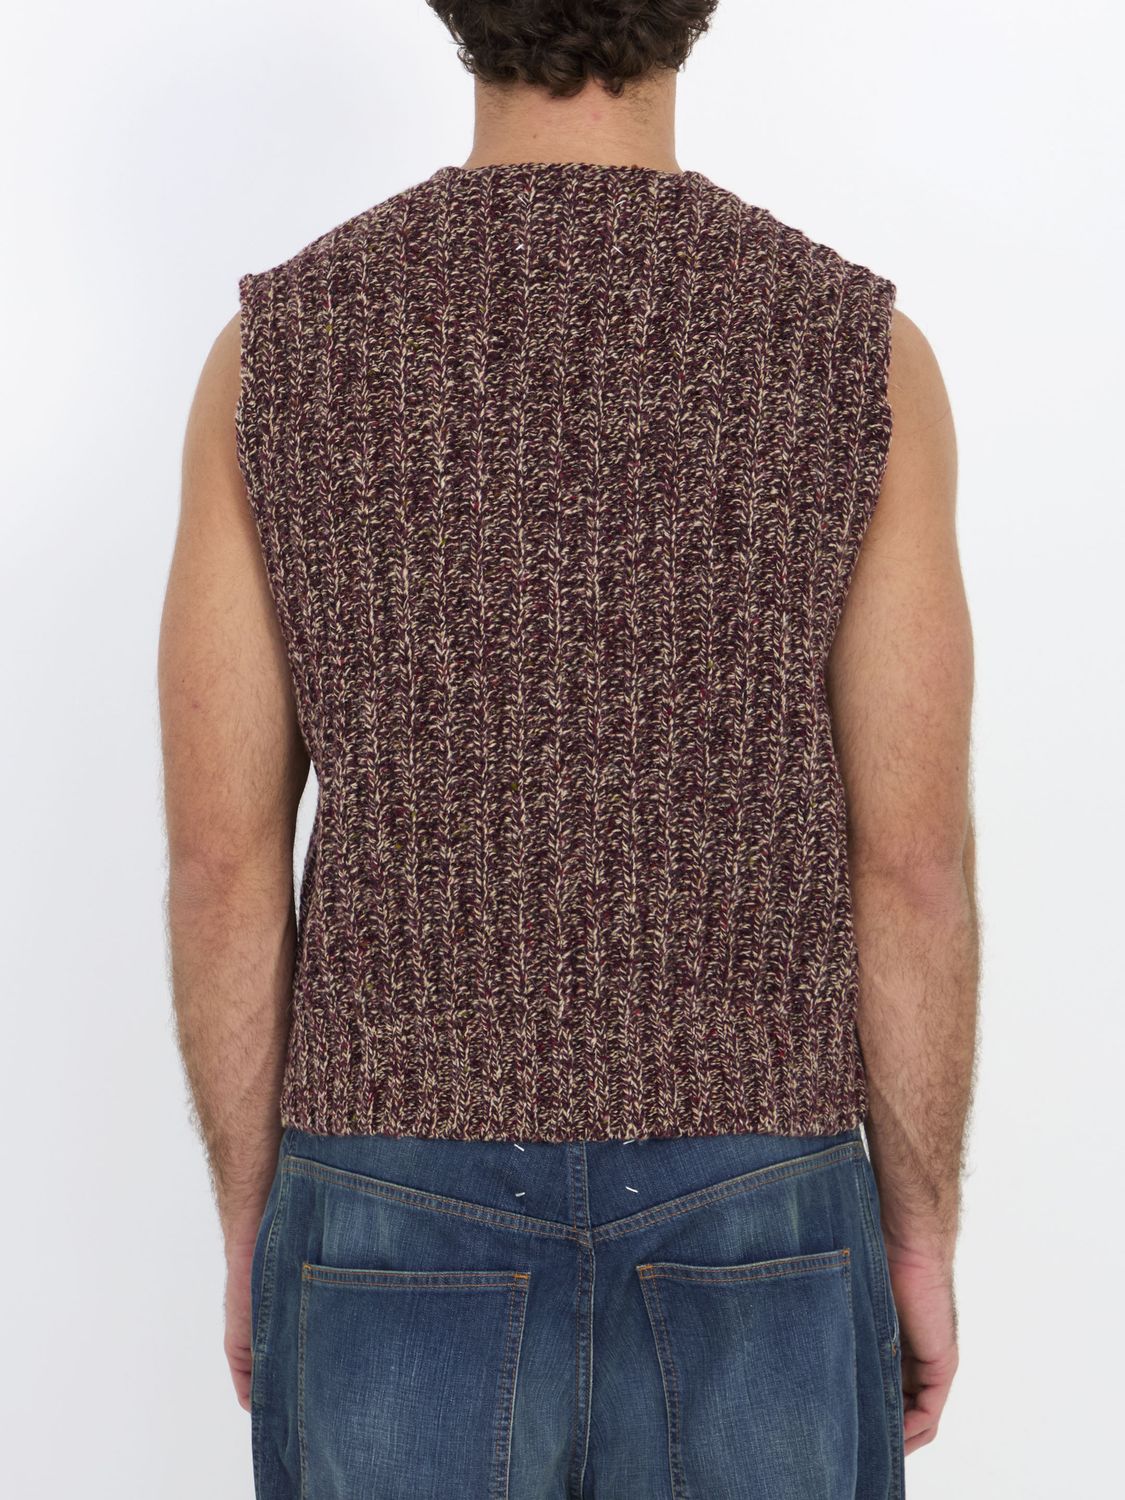 MAISON MARGIELA Bordeaux Chunky Braided Knit Vest with V-Neckline for Men